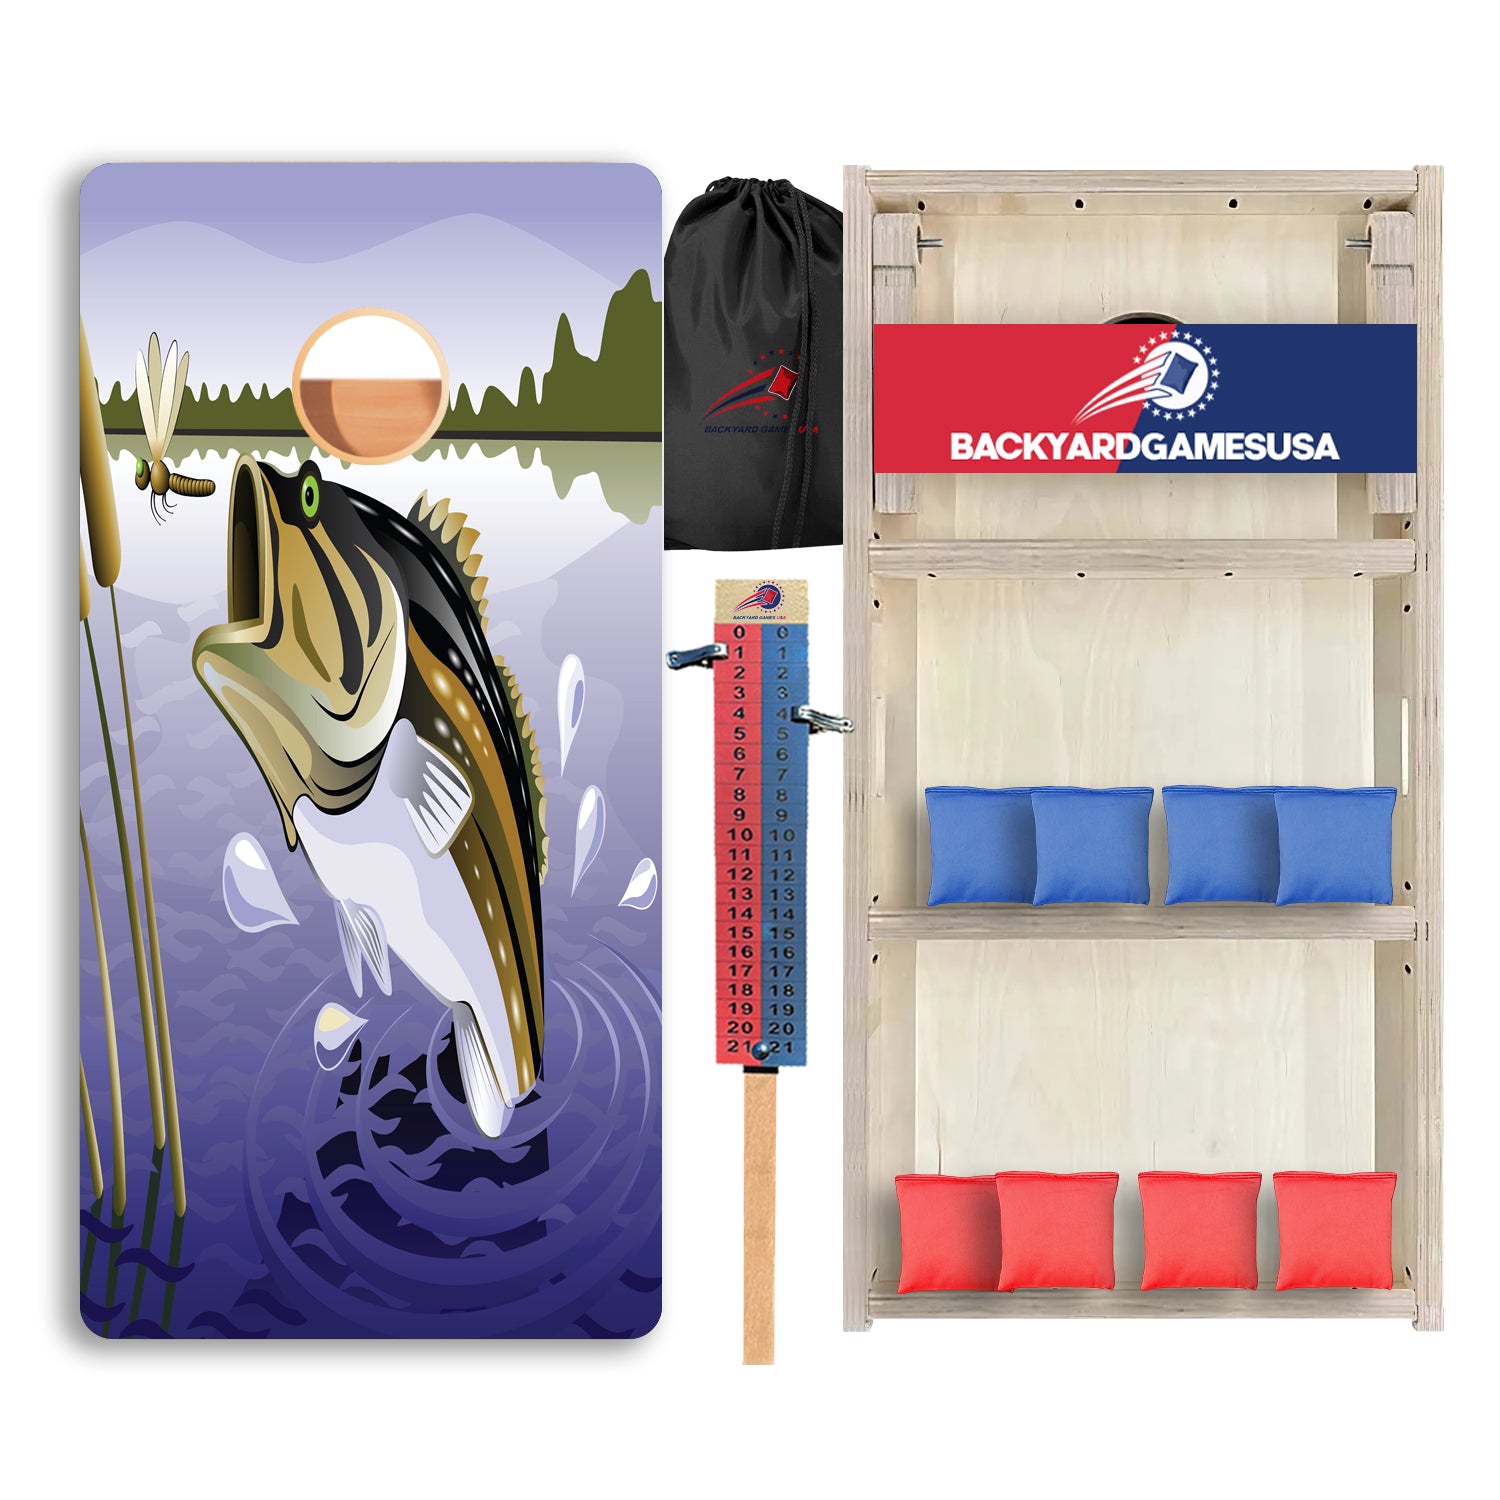 Fishing Professional Cornhole Boards